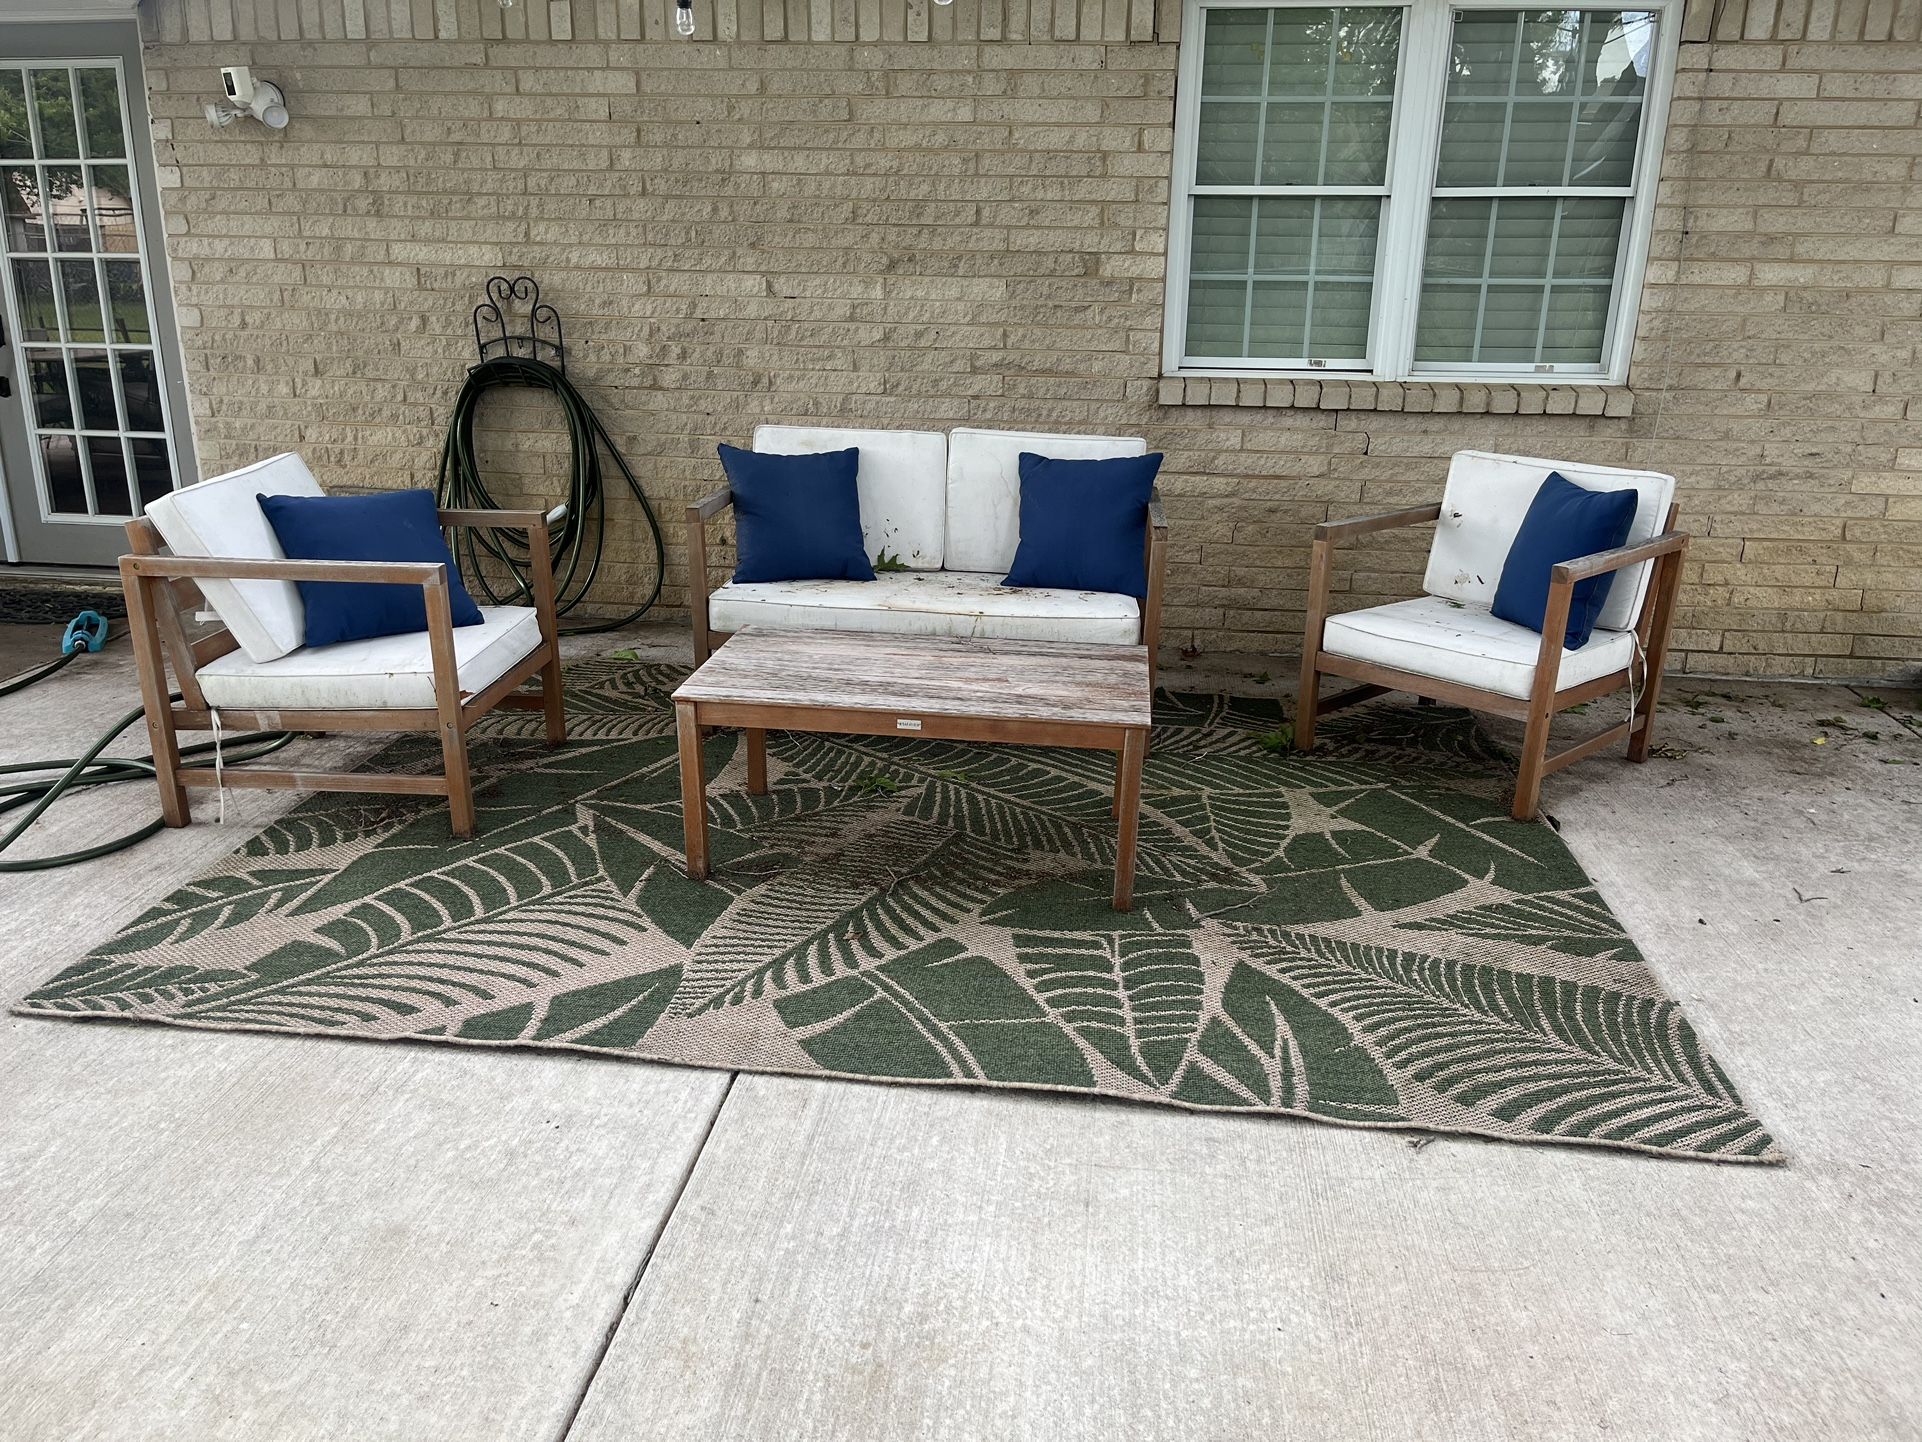 FREE patio Furniture - Used 